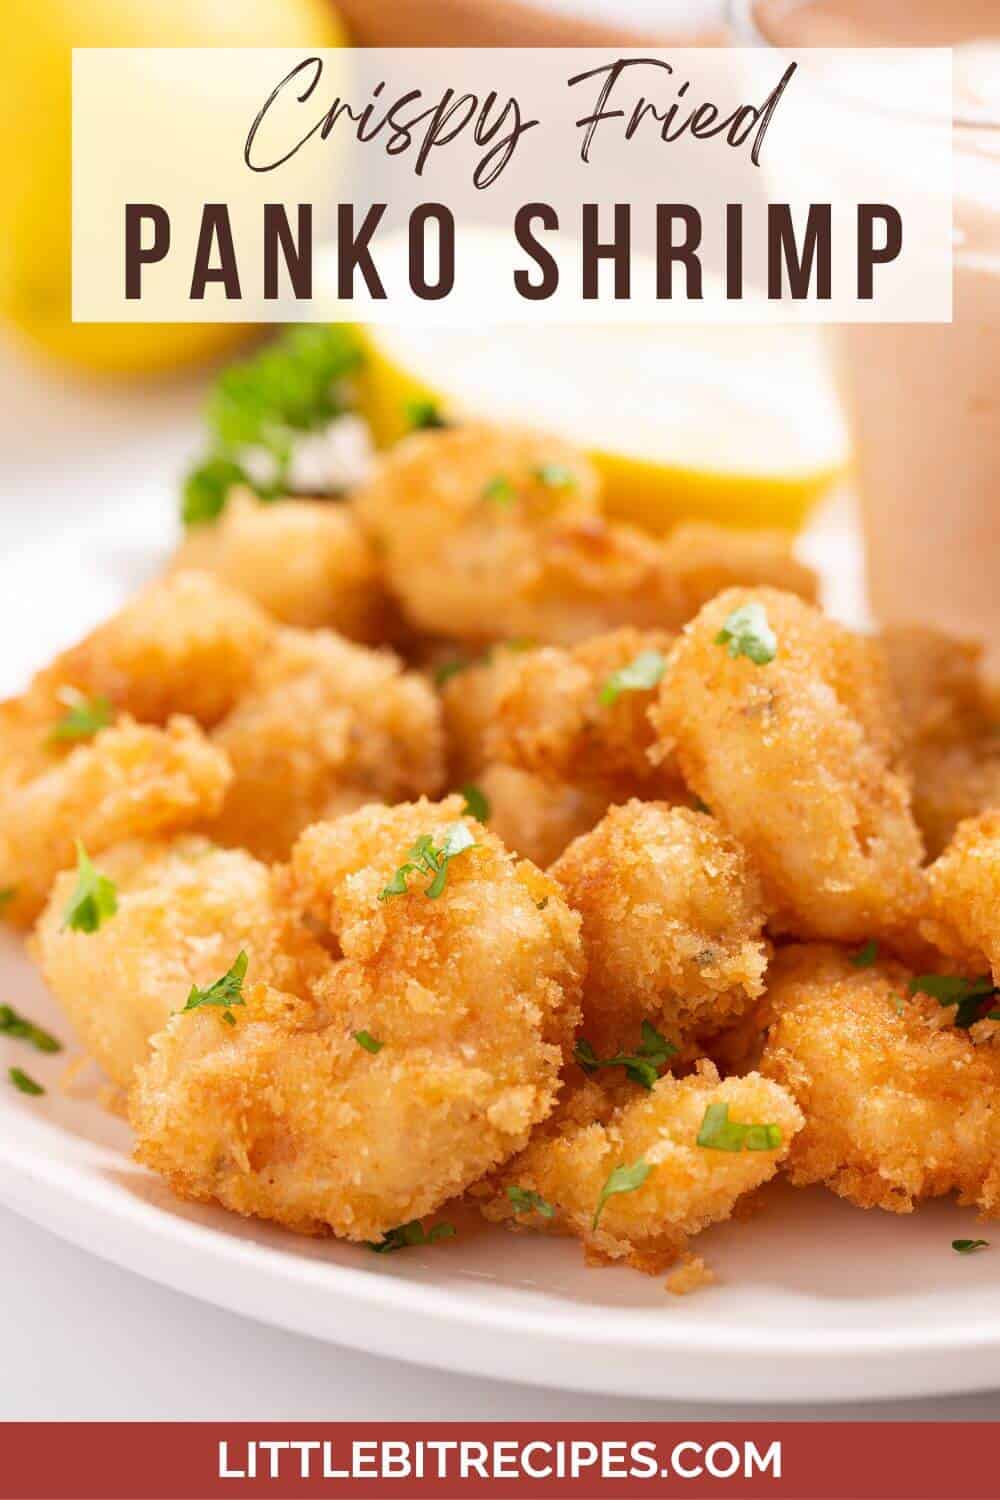 fried panko shrimp with text.